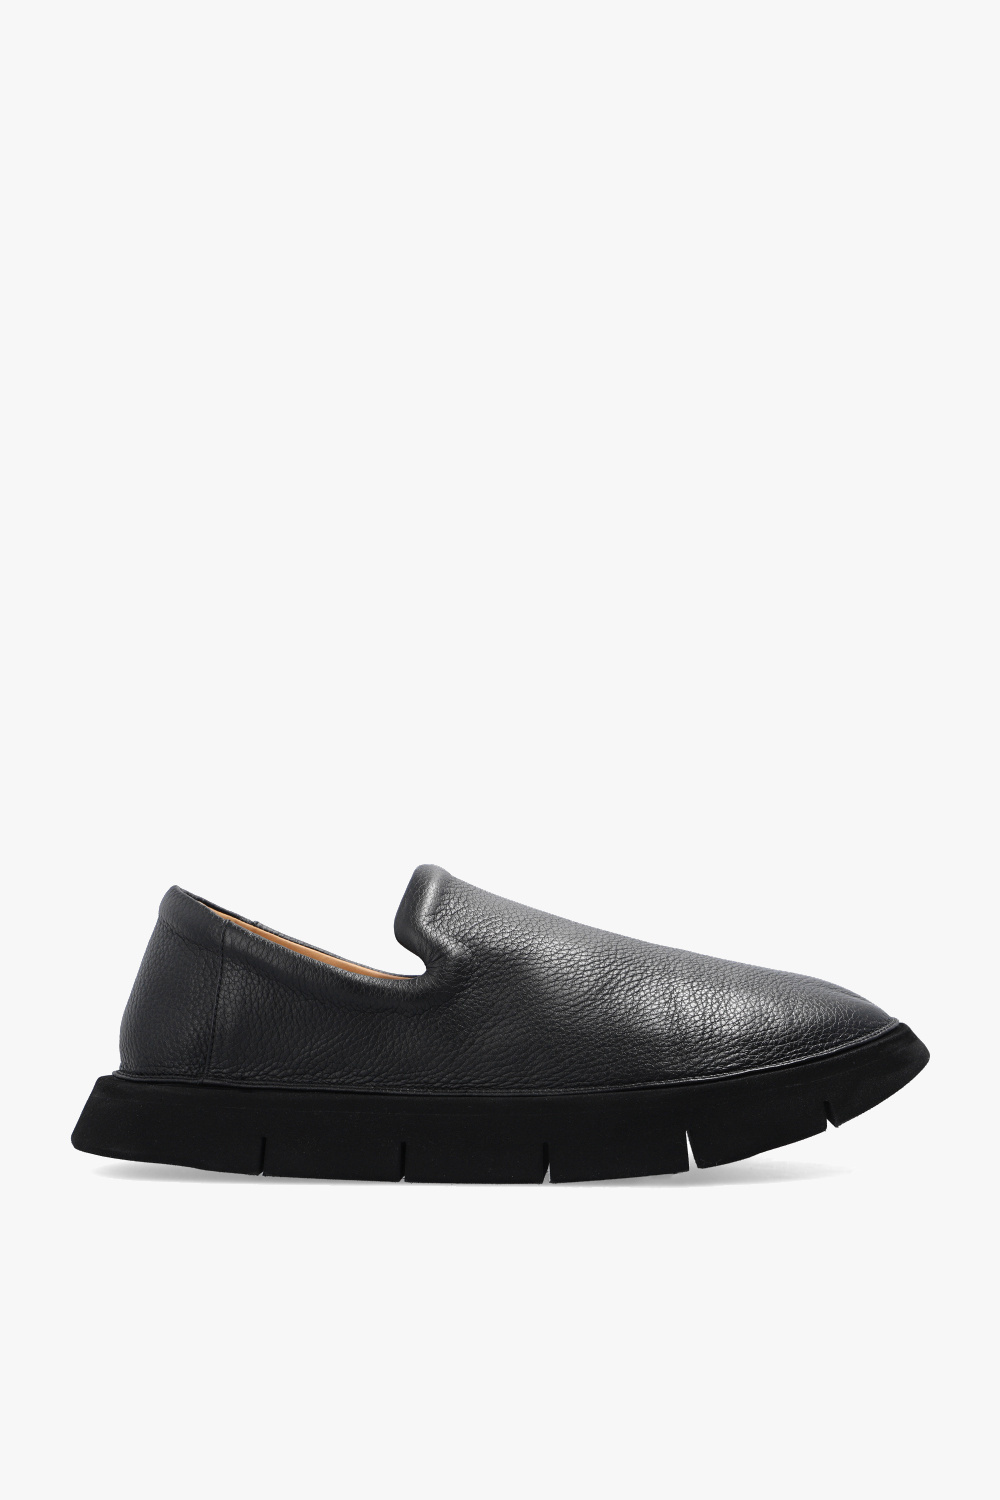 Marsell ‘Intagliata’ shoes